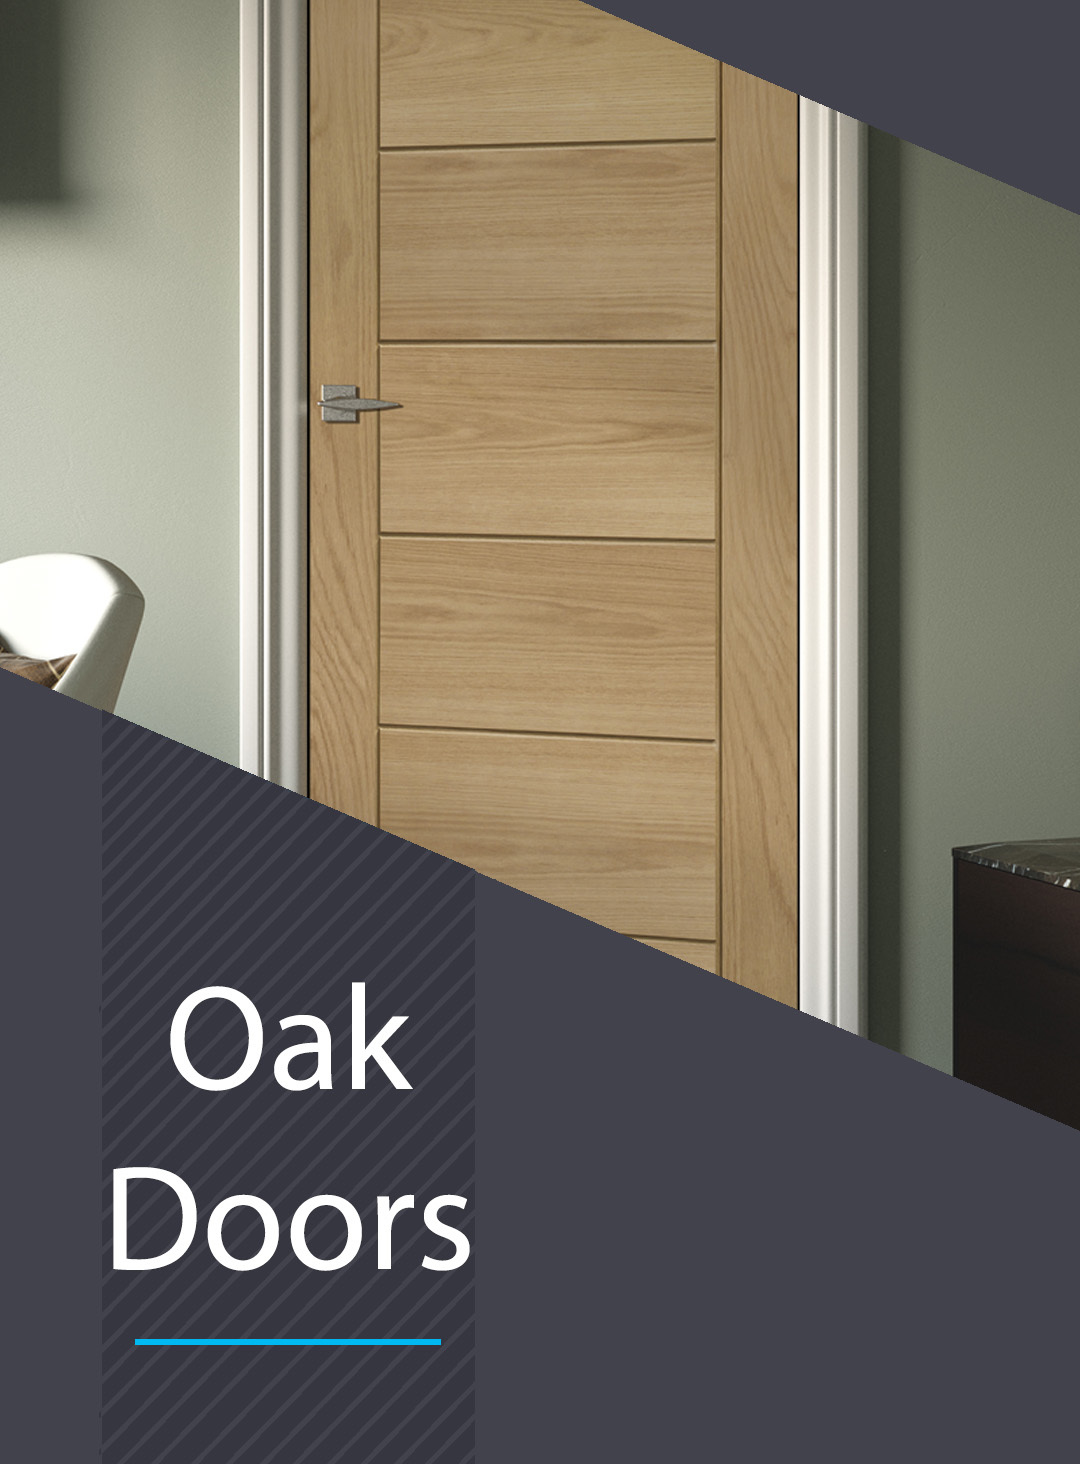 Internal Doors | Cheap Quality Interior Doors